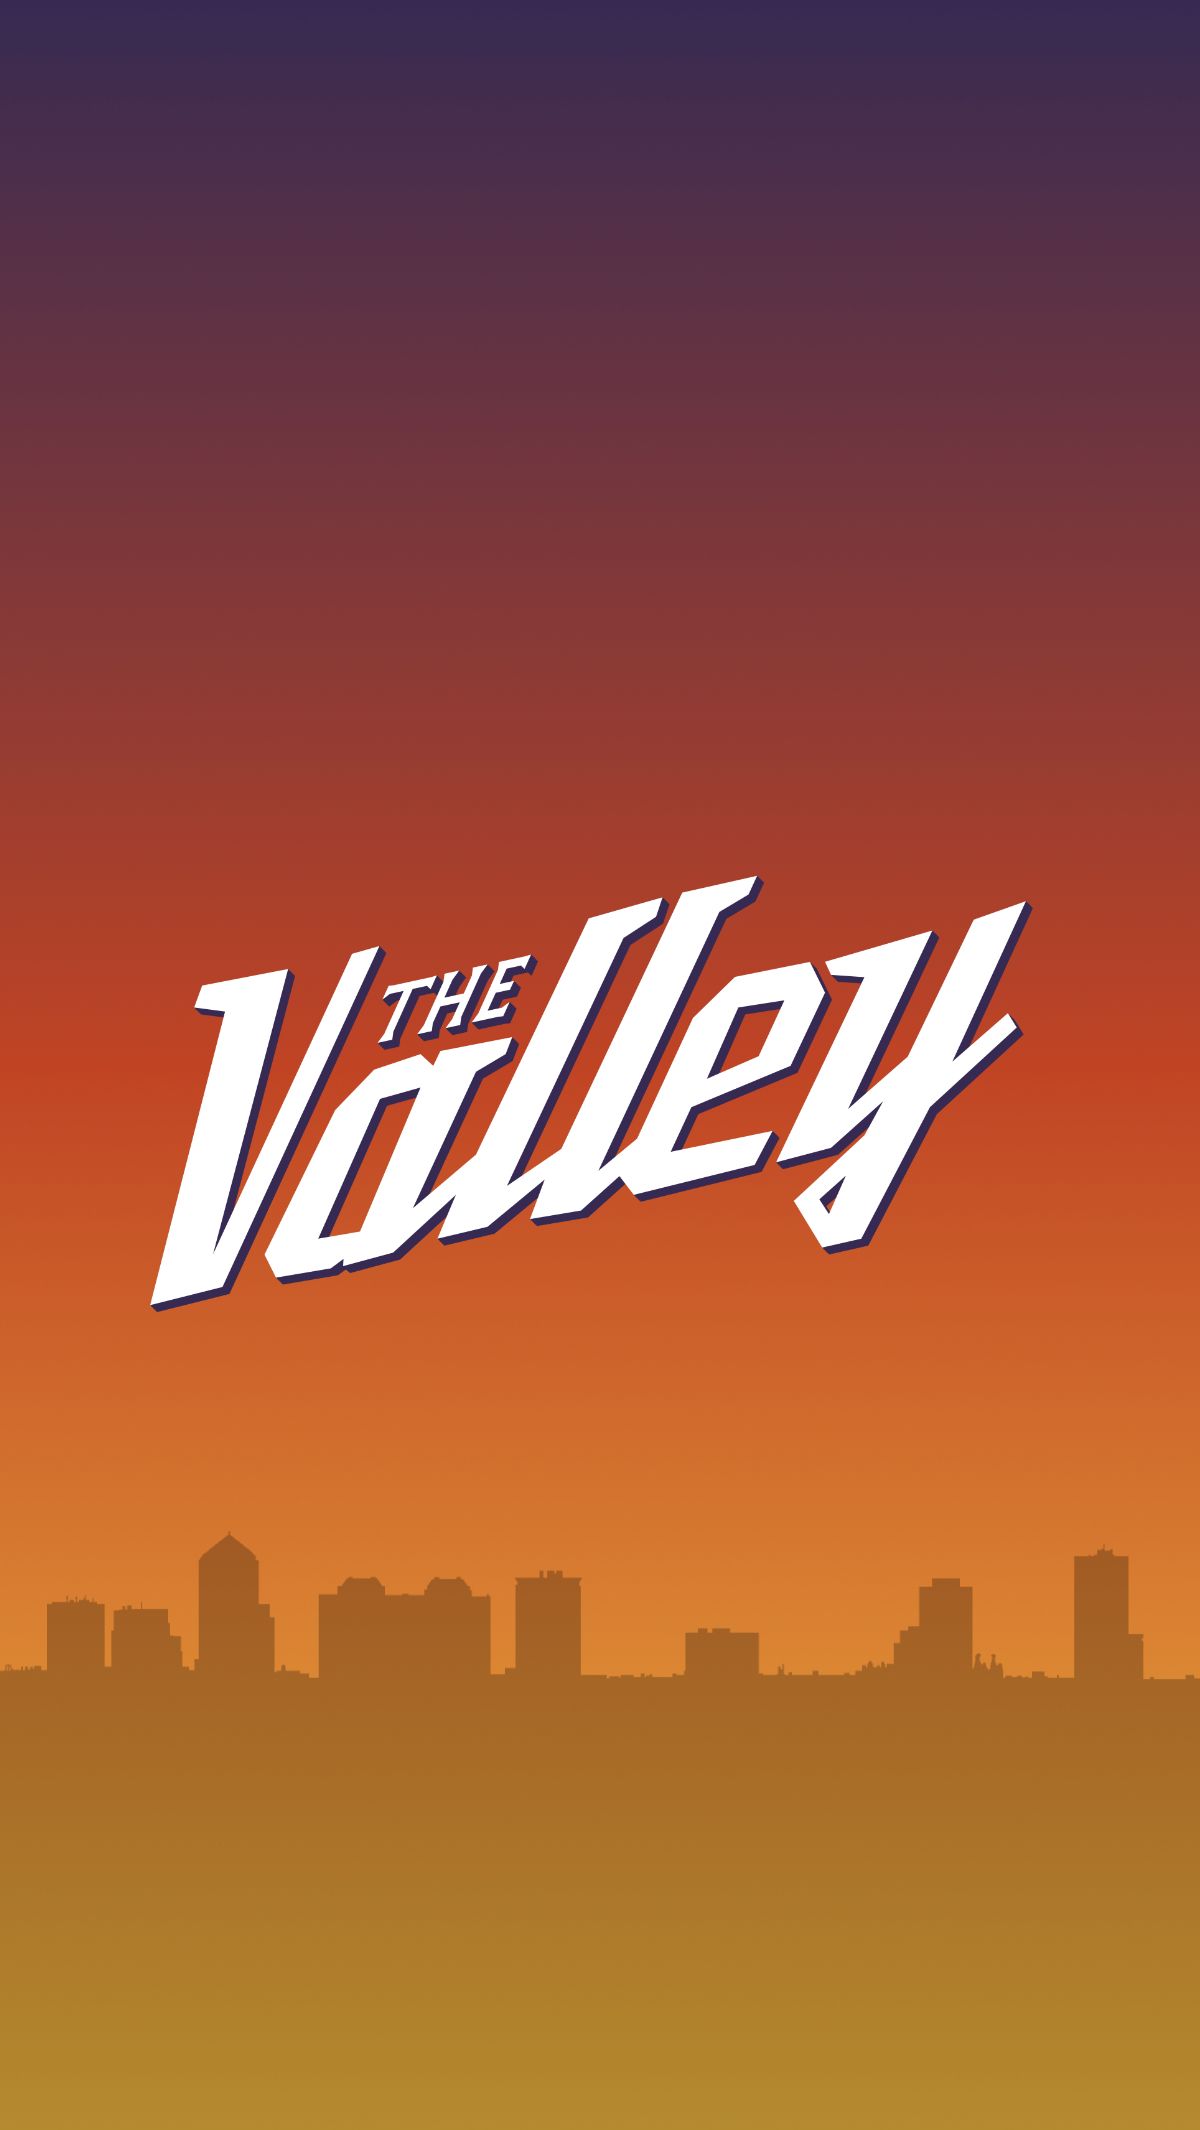 The Valley   Phoenix Basketball City Premium T Shirt by sportsign